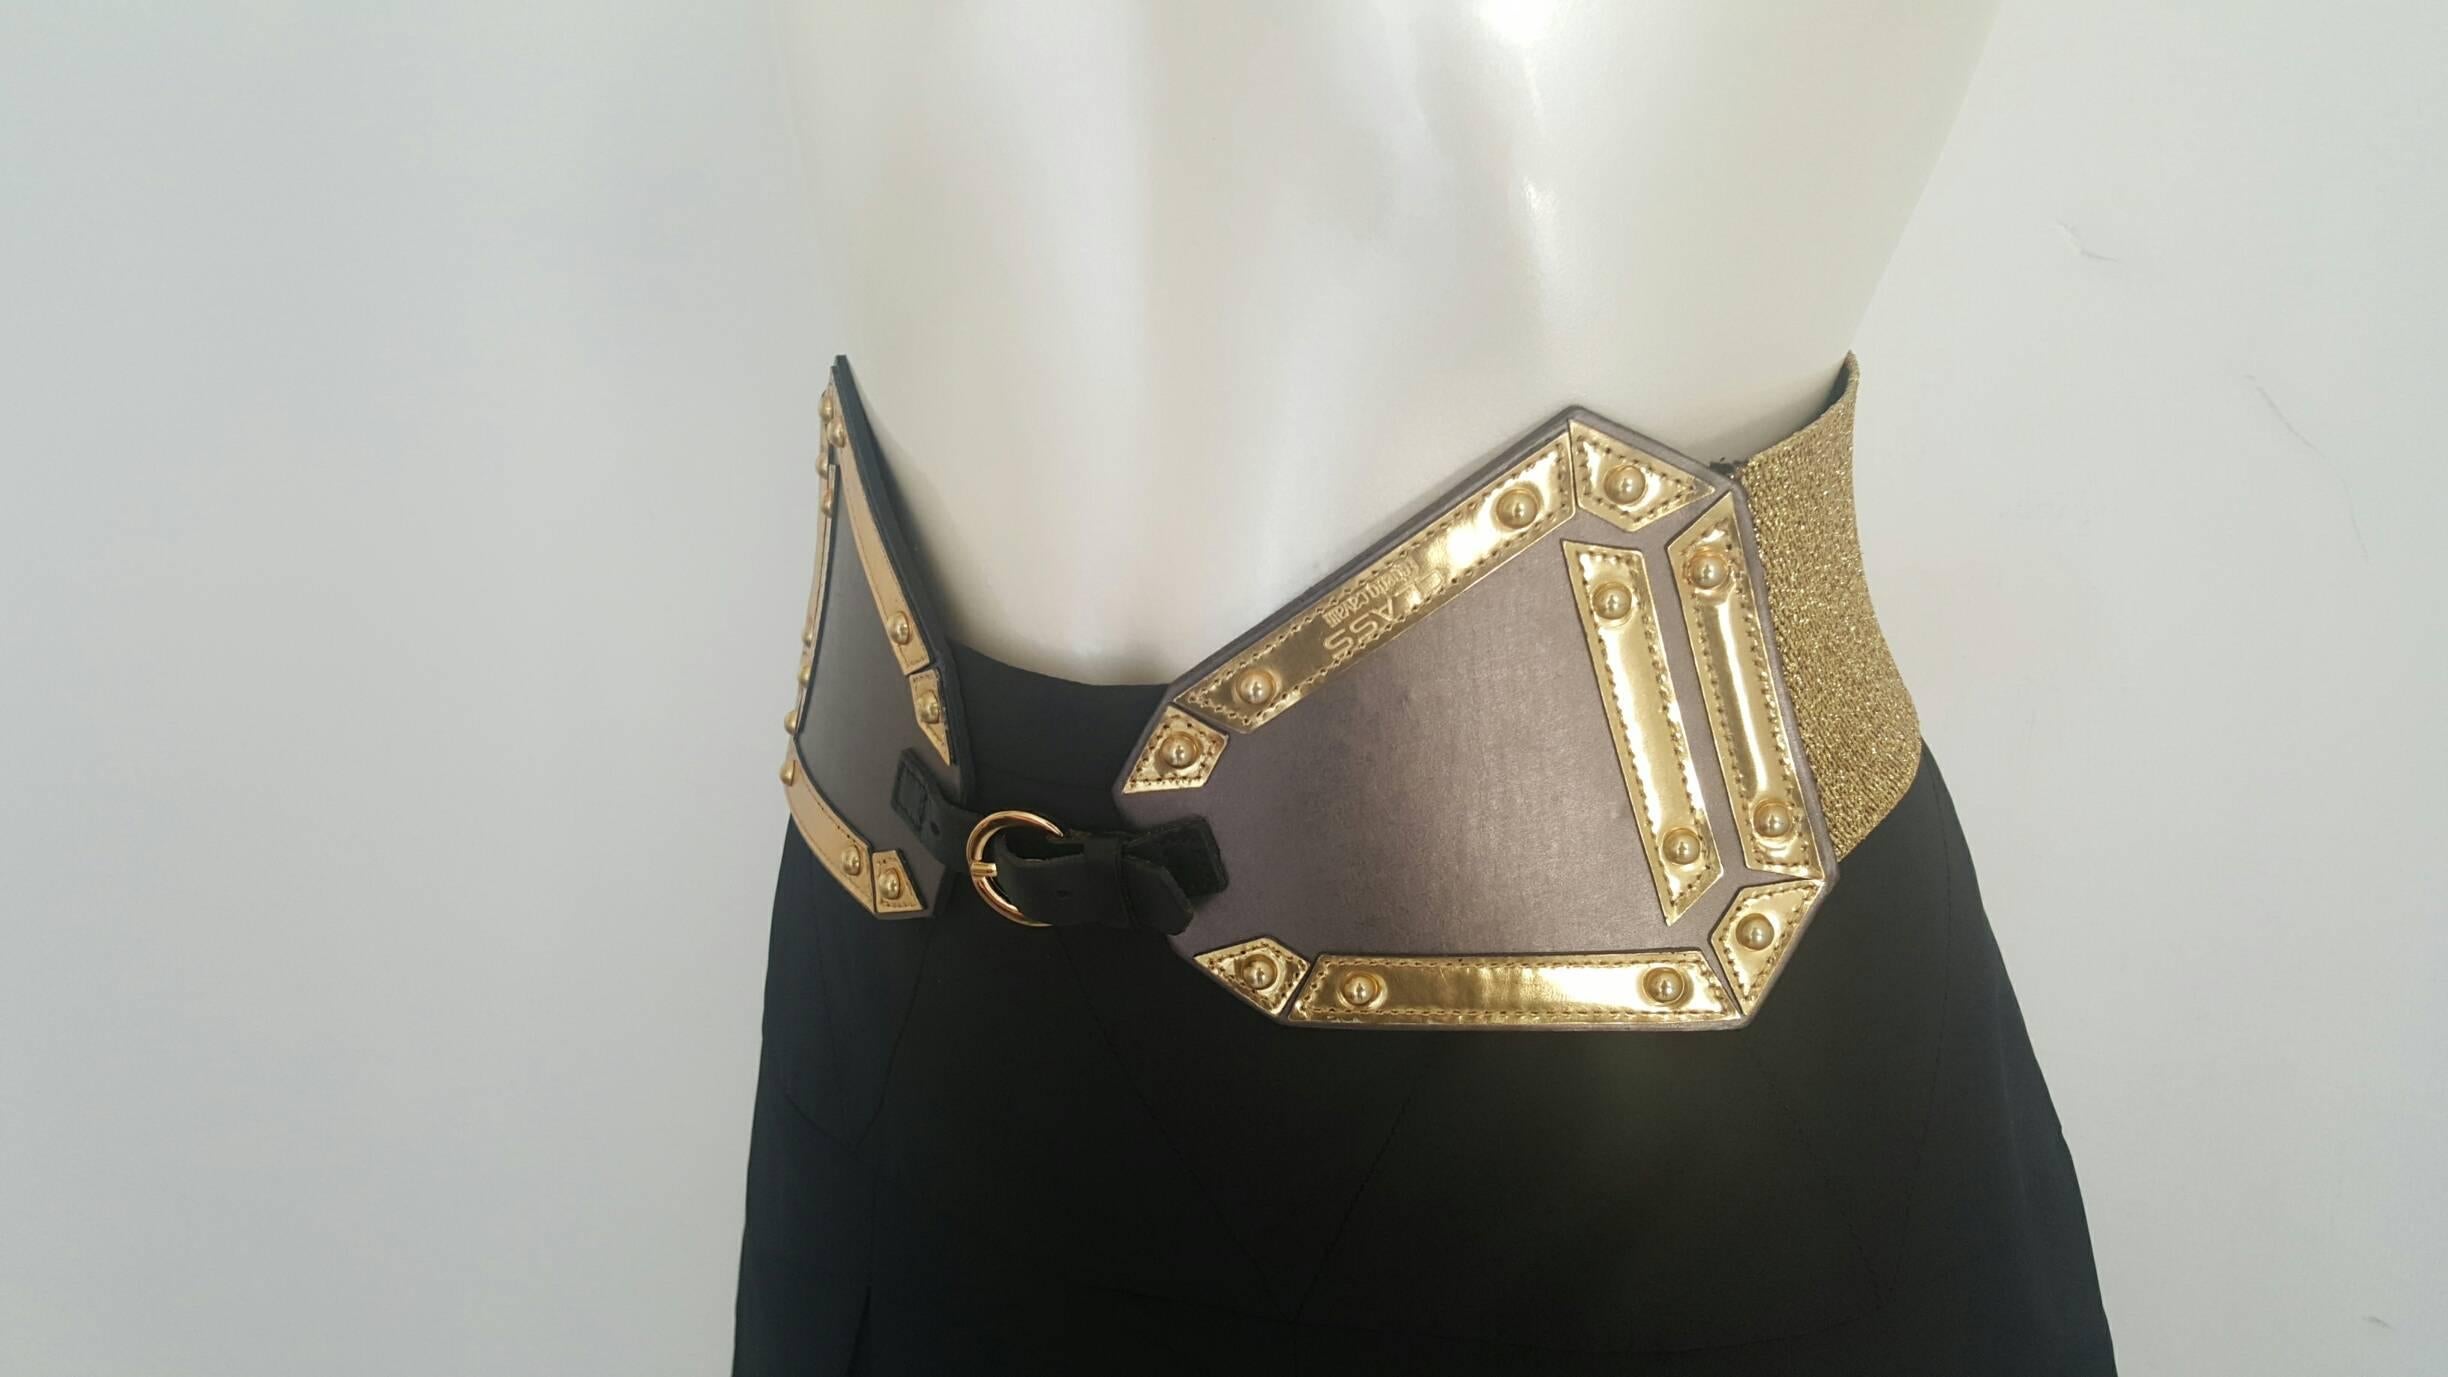 2000s Roberto Cavalli black skirt with gold belt

amazing black skirt with gold belt 

totally made in italy in italian size range 42 